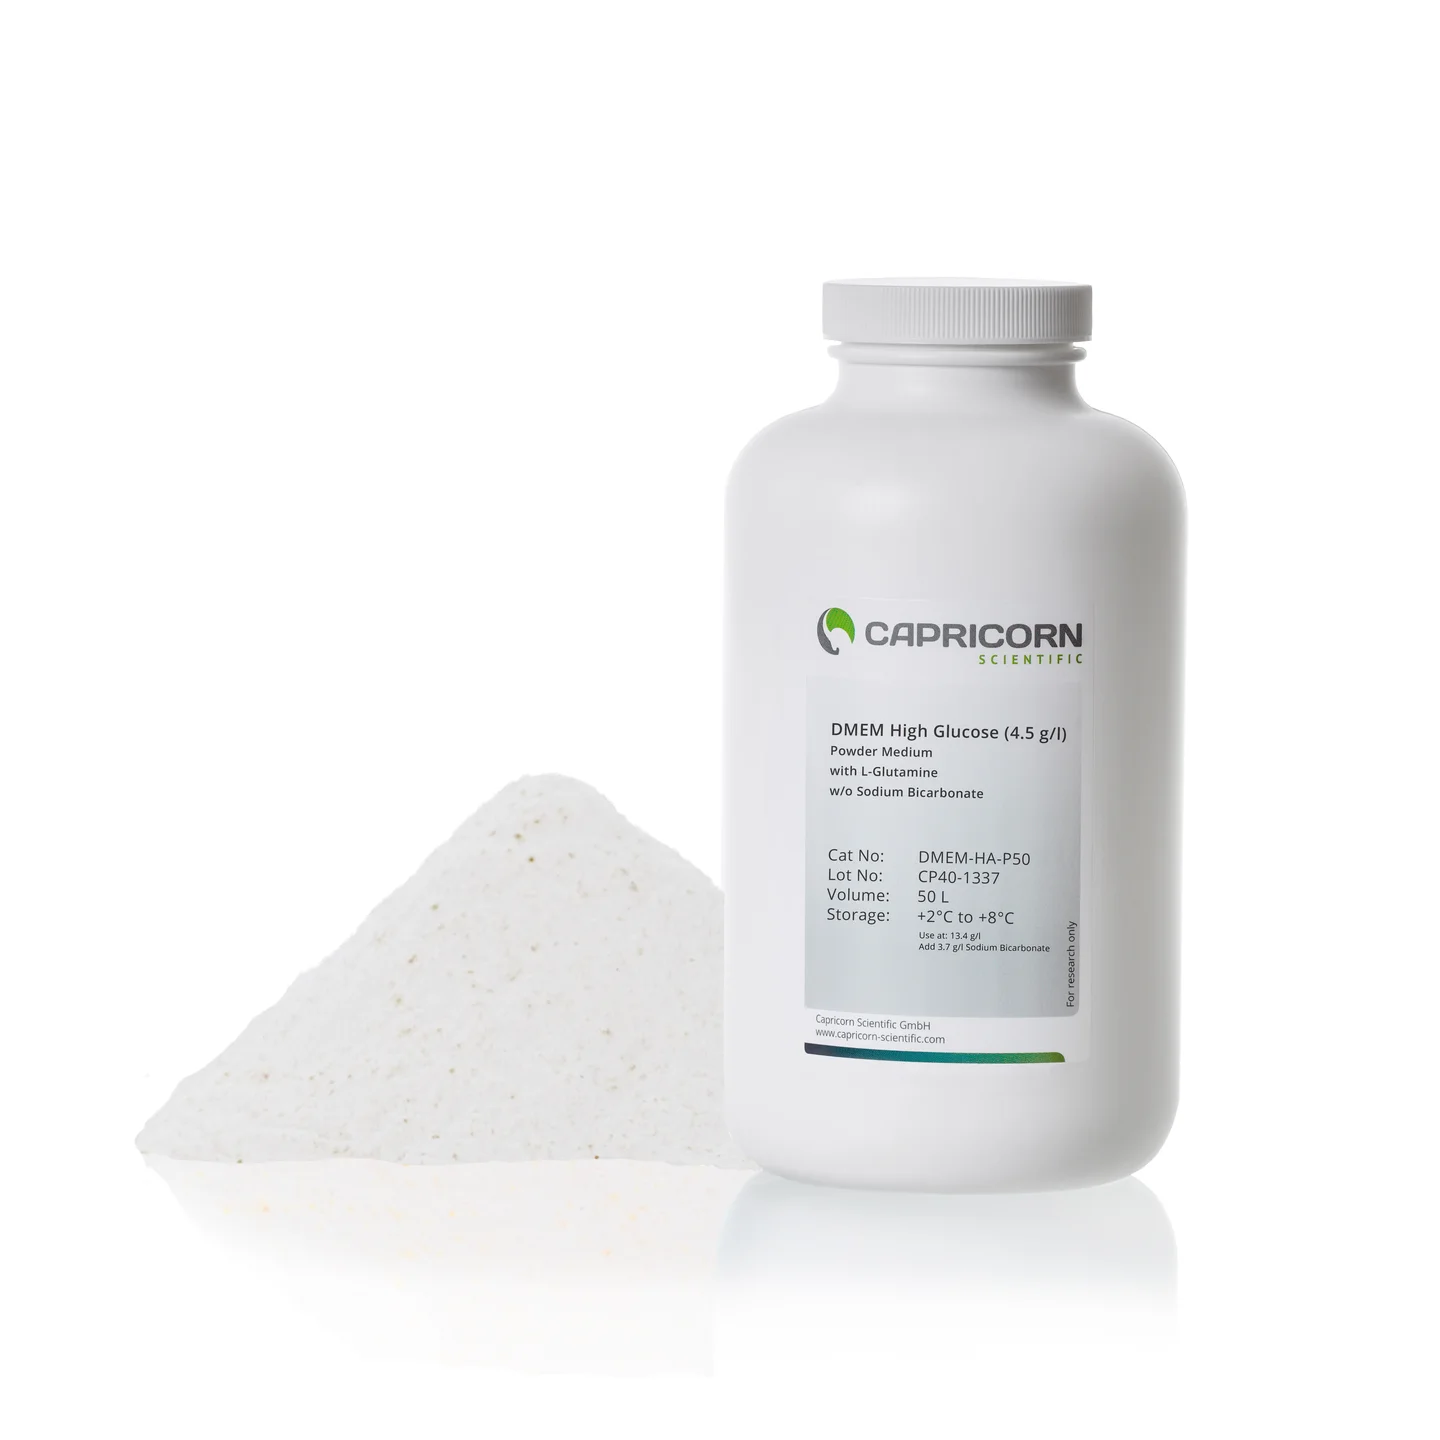 DMEM High Glucose (4.5 g/l) Powder Medium, 50 L, with L-Glutamine, without Sodium Bicarbonate